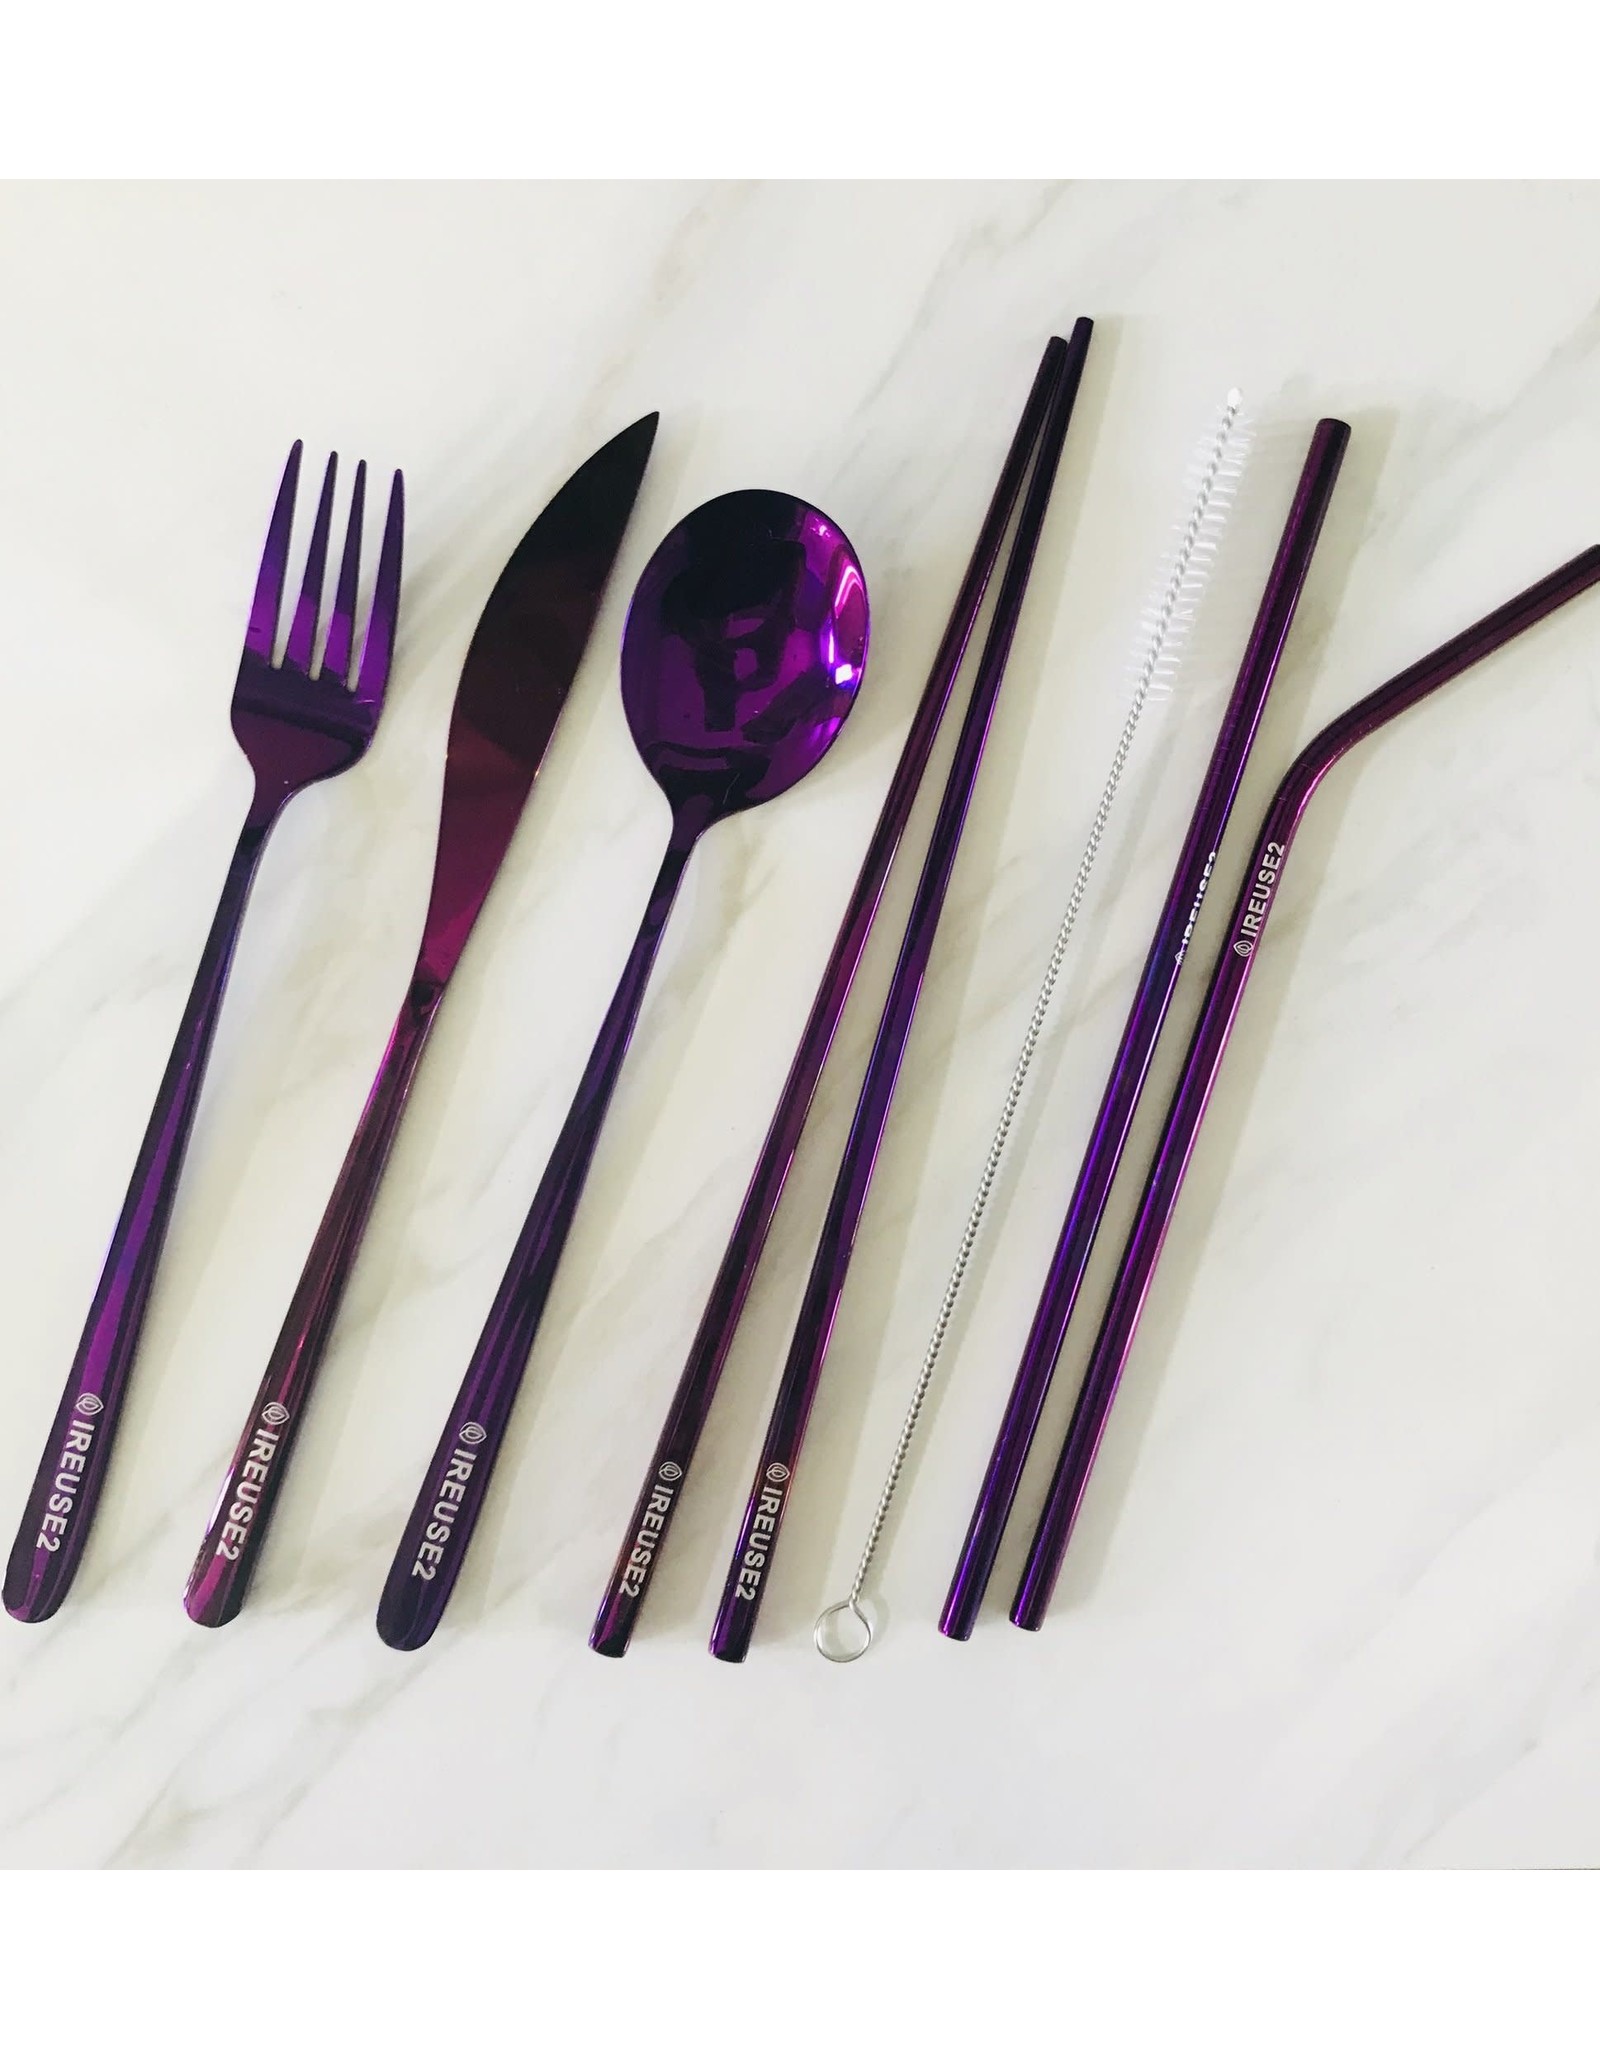 ireuse2 Premium Reusable Cutlery Set - Adult